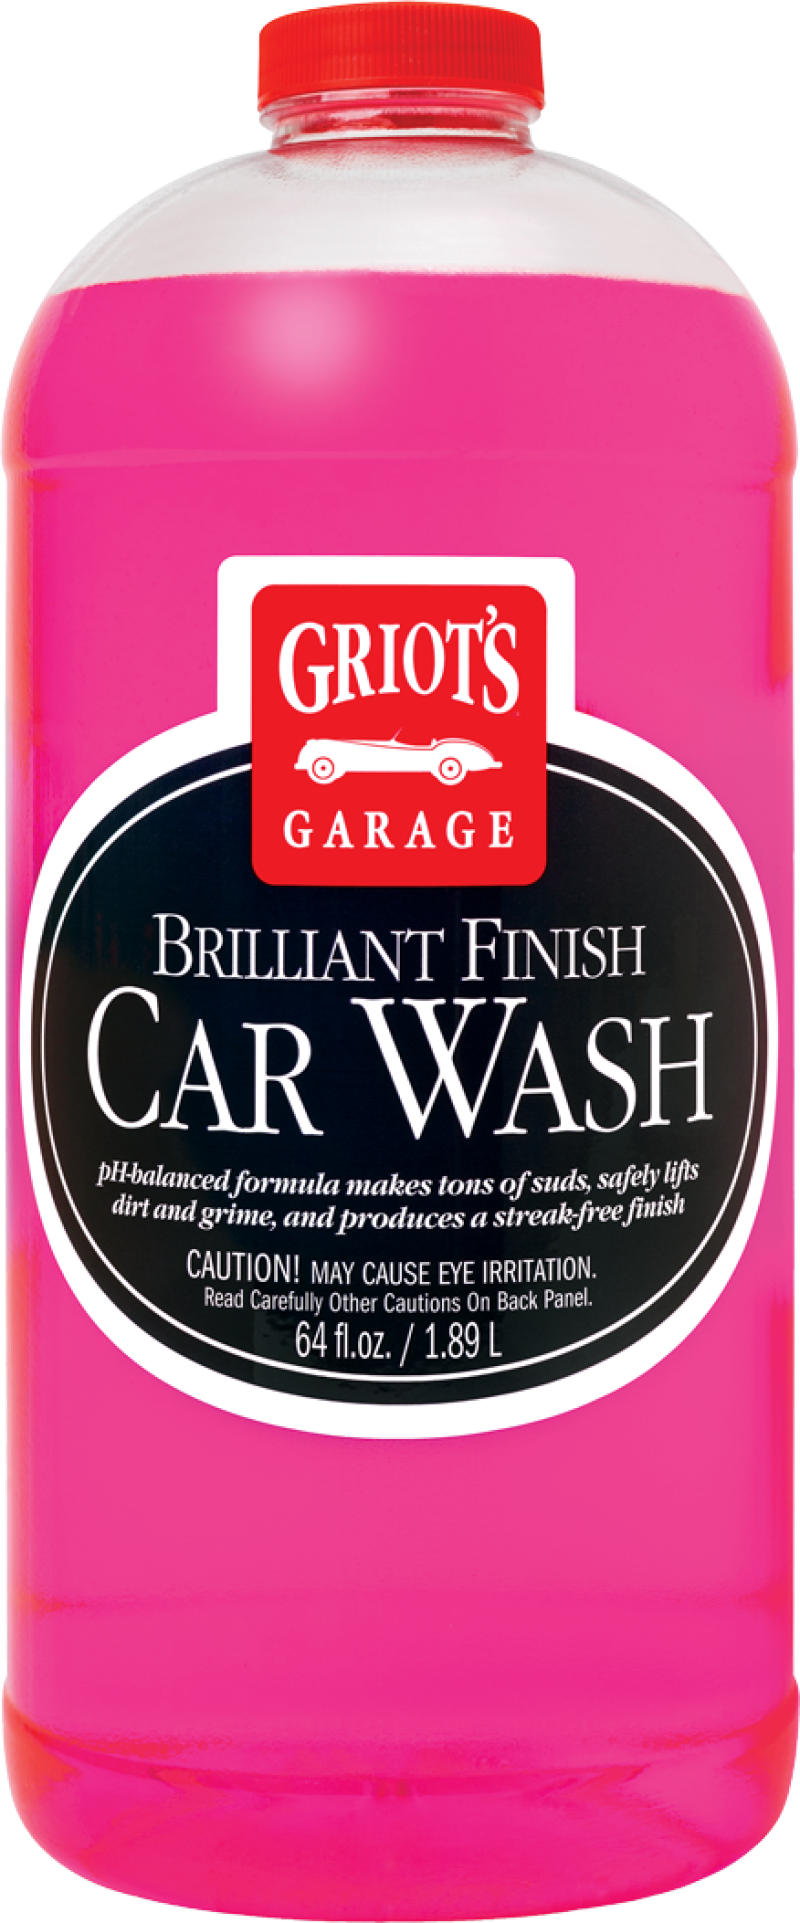 Griots Garage Brilliant Finish Car Wash - 64oz.